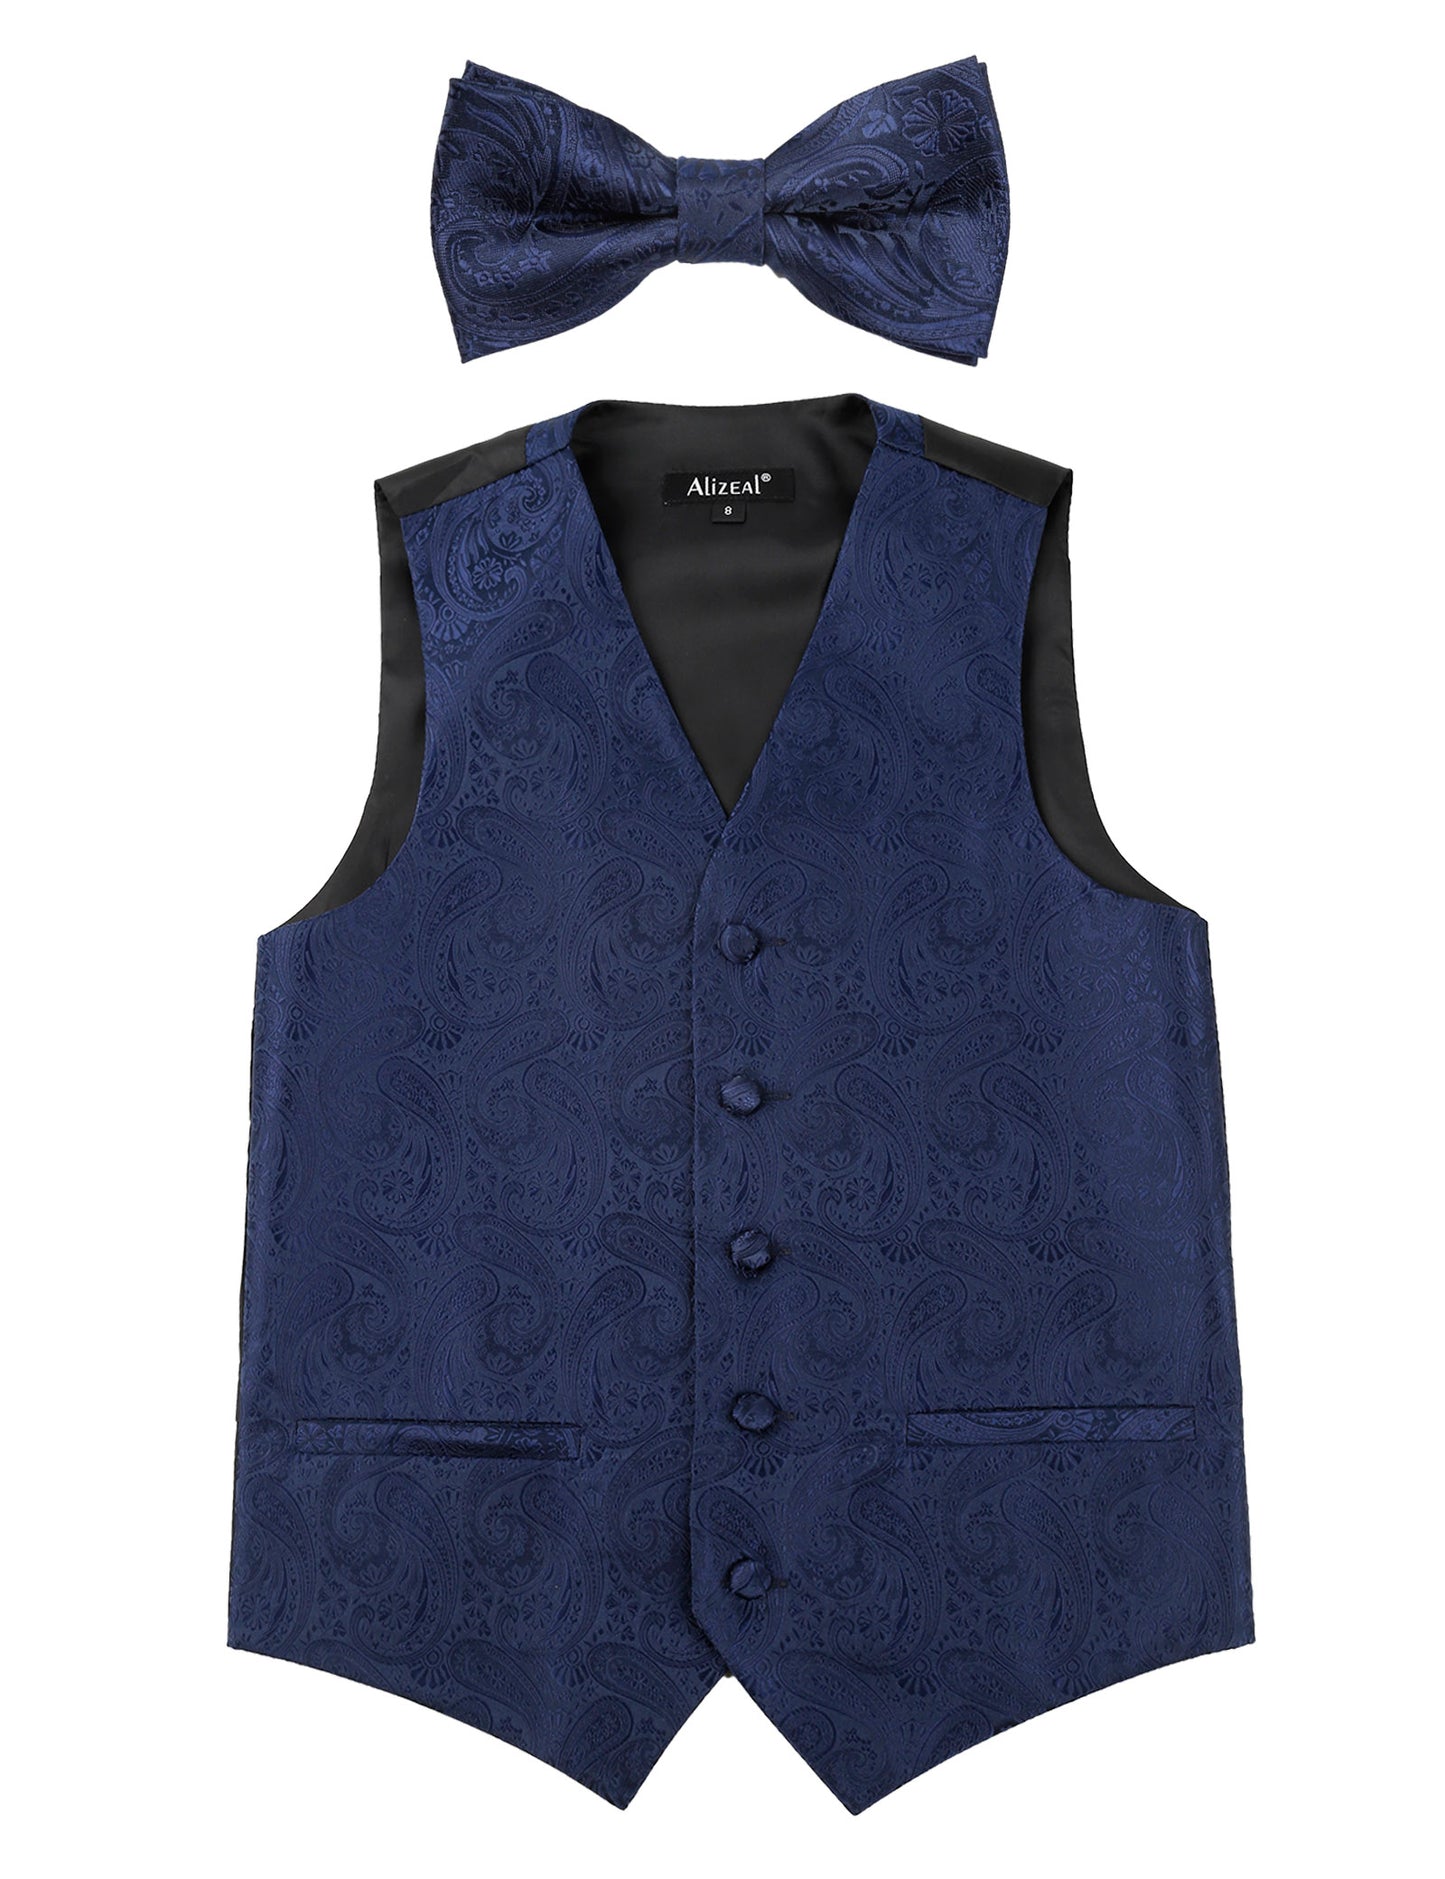 Boy's Paisley Jacquard Pre-Tied Bow Tie with Classic Floral Dress Suit Vest Set, 077-Dark Navy